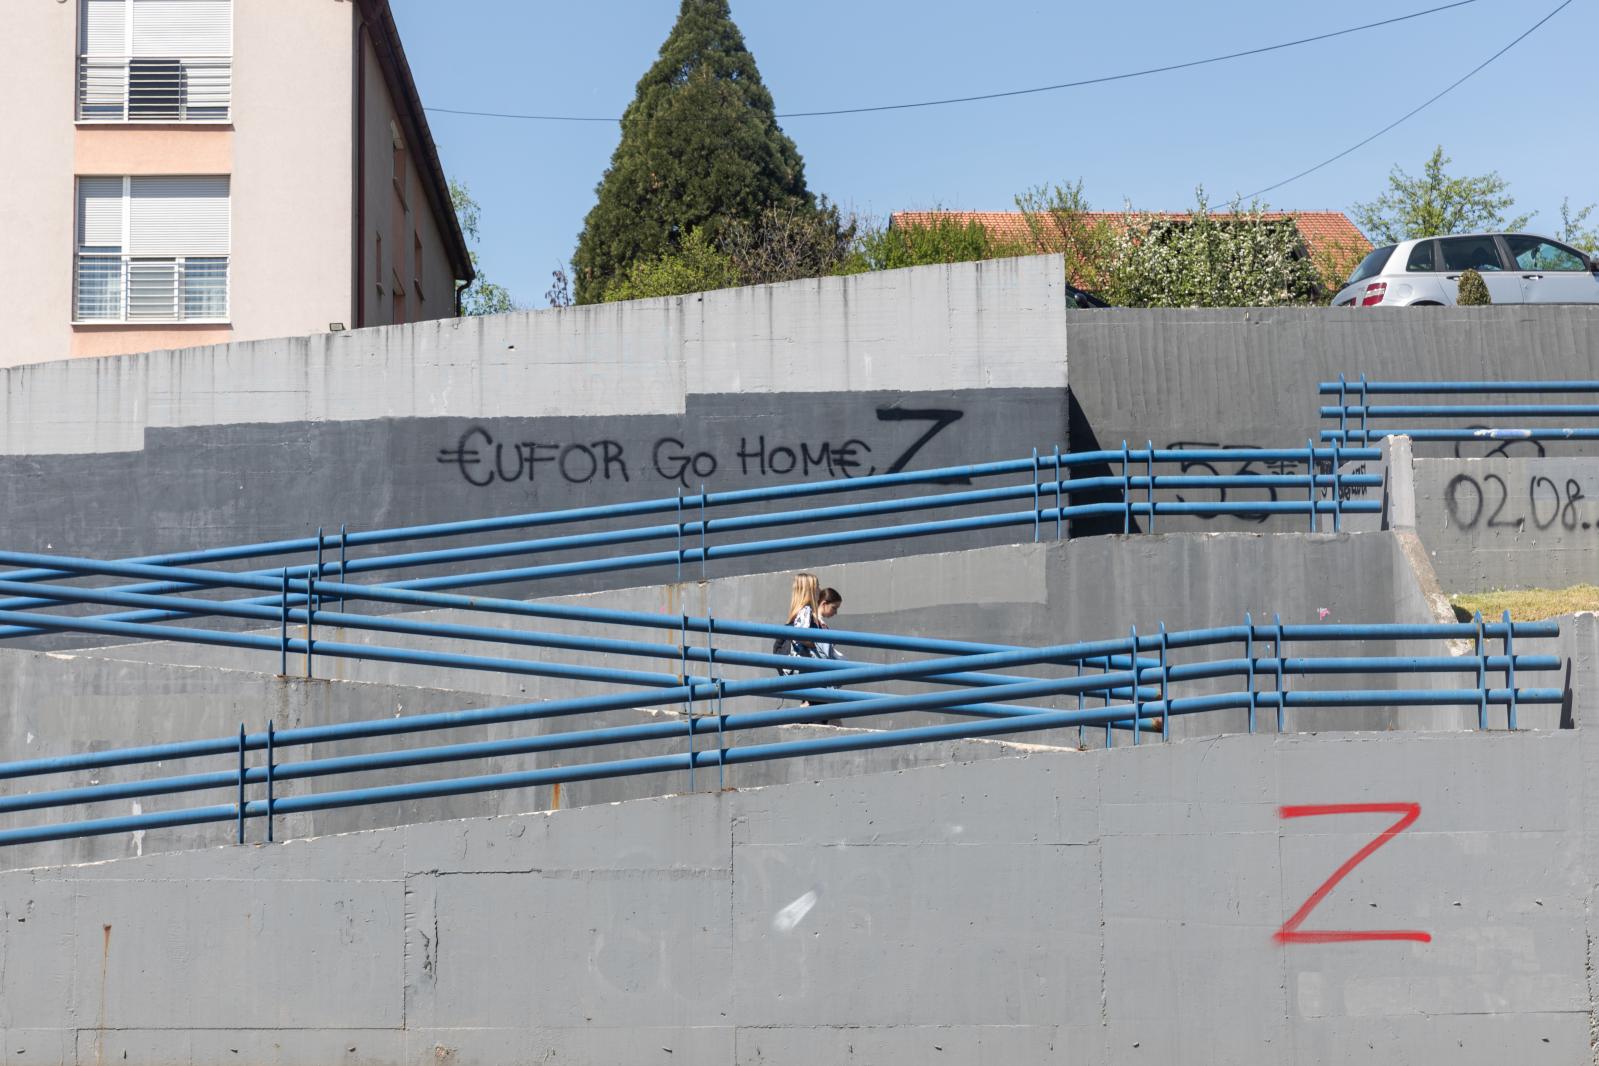 La derive autoritaire de la Republika Srpska  - Banja Luka, le 15 avril 2022 - Des graffitis...